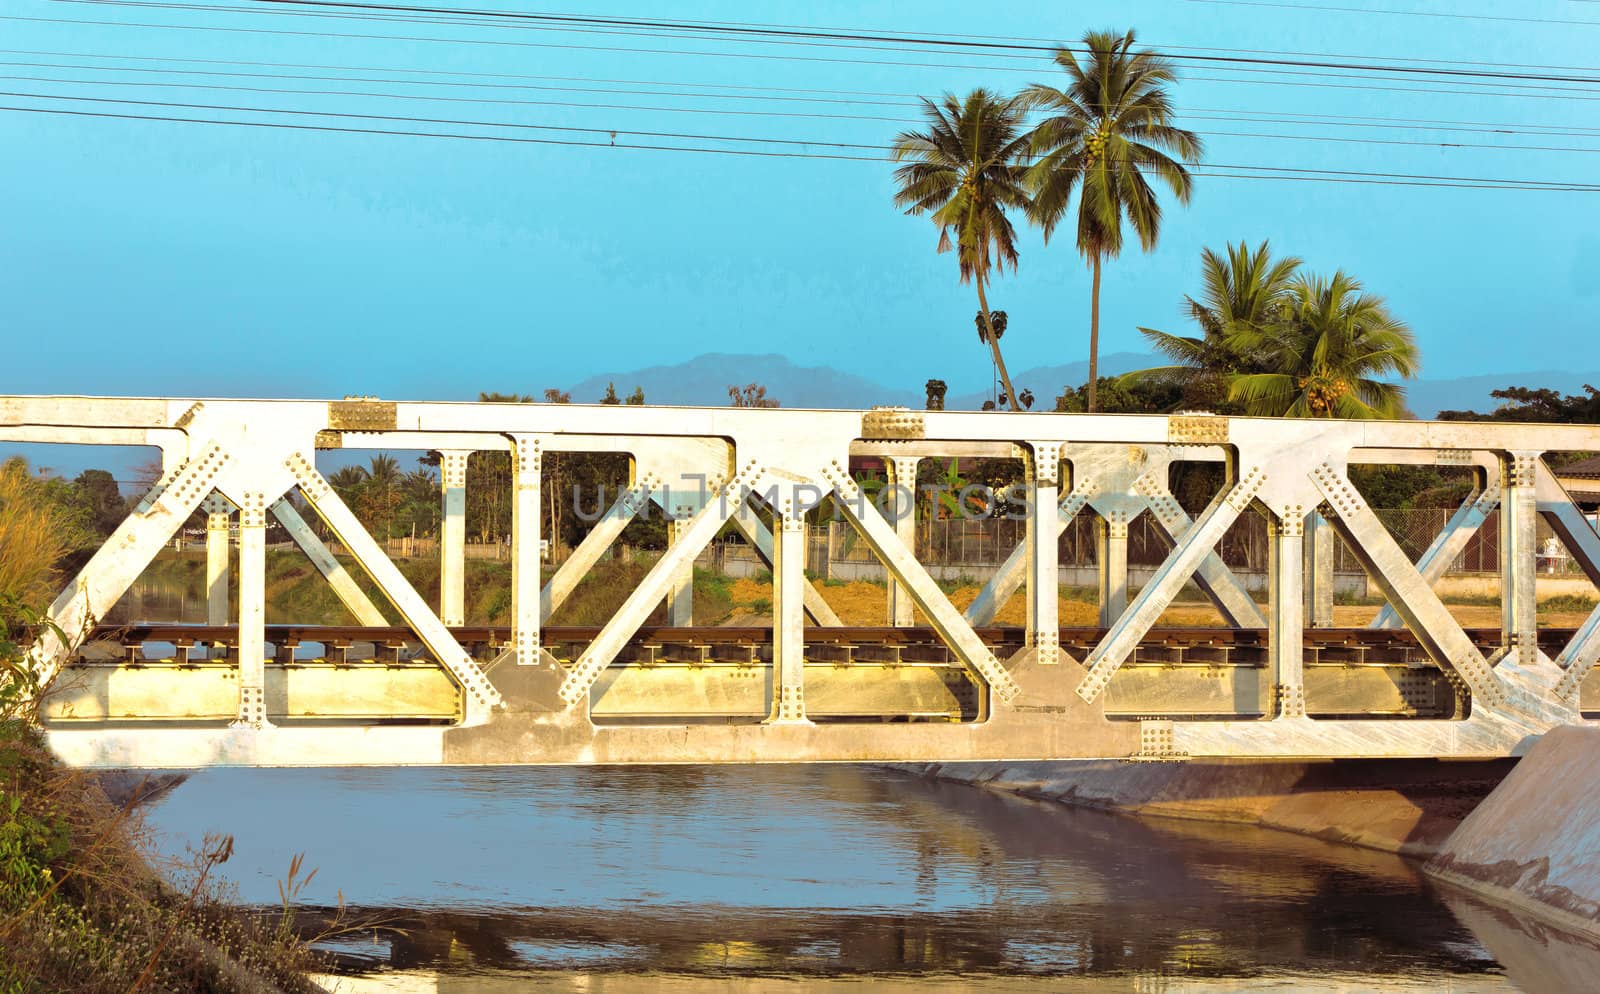 Railway bridge across river in a village outside the city